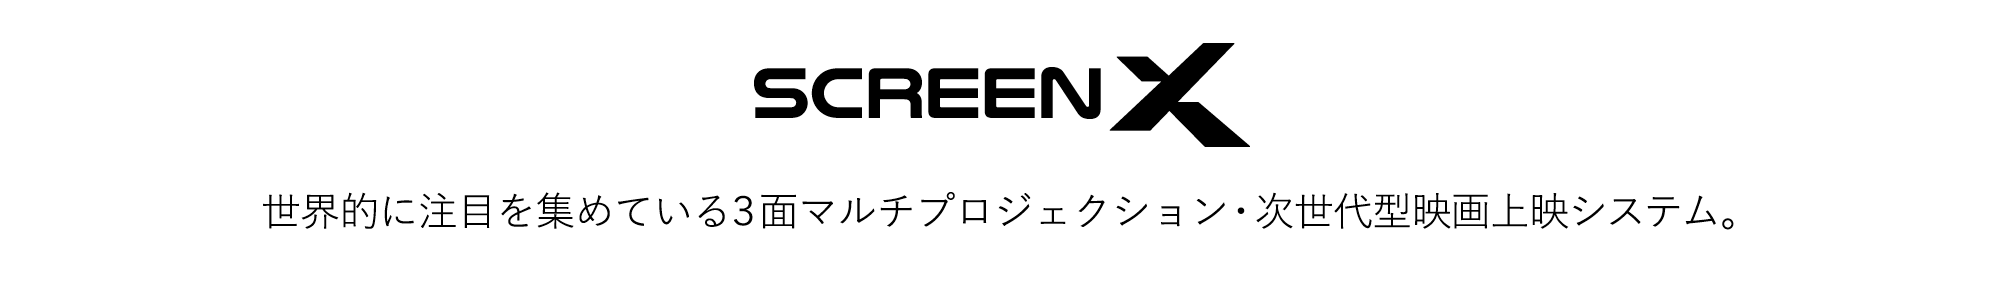 ScreenX 世界的に注目を集めている３面マルチプロジェクション・次世代型映画上映システム。